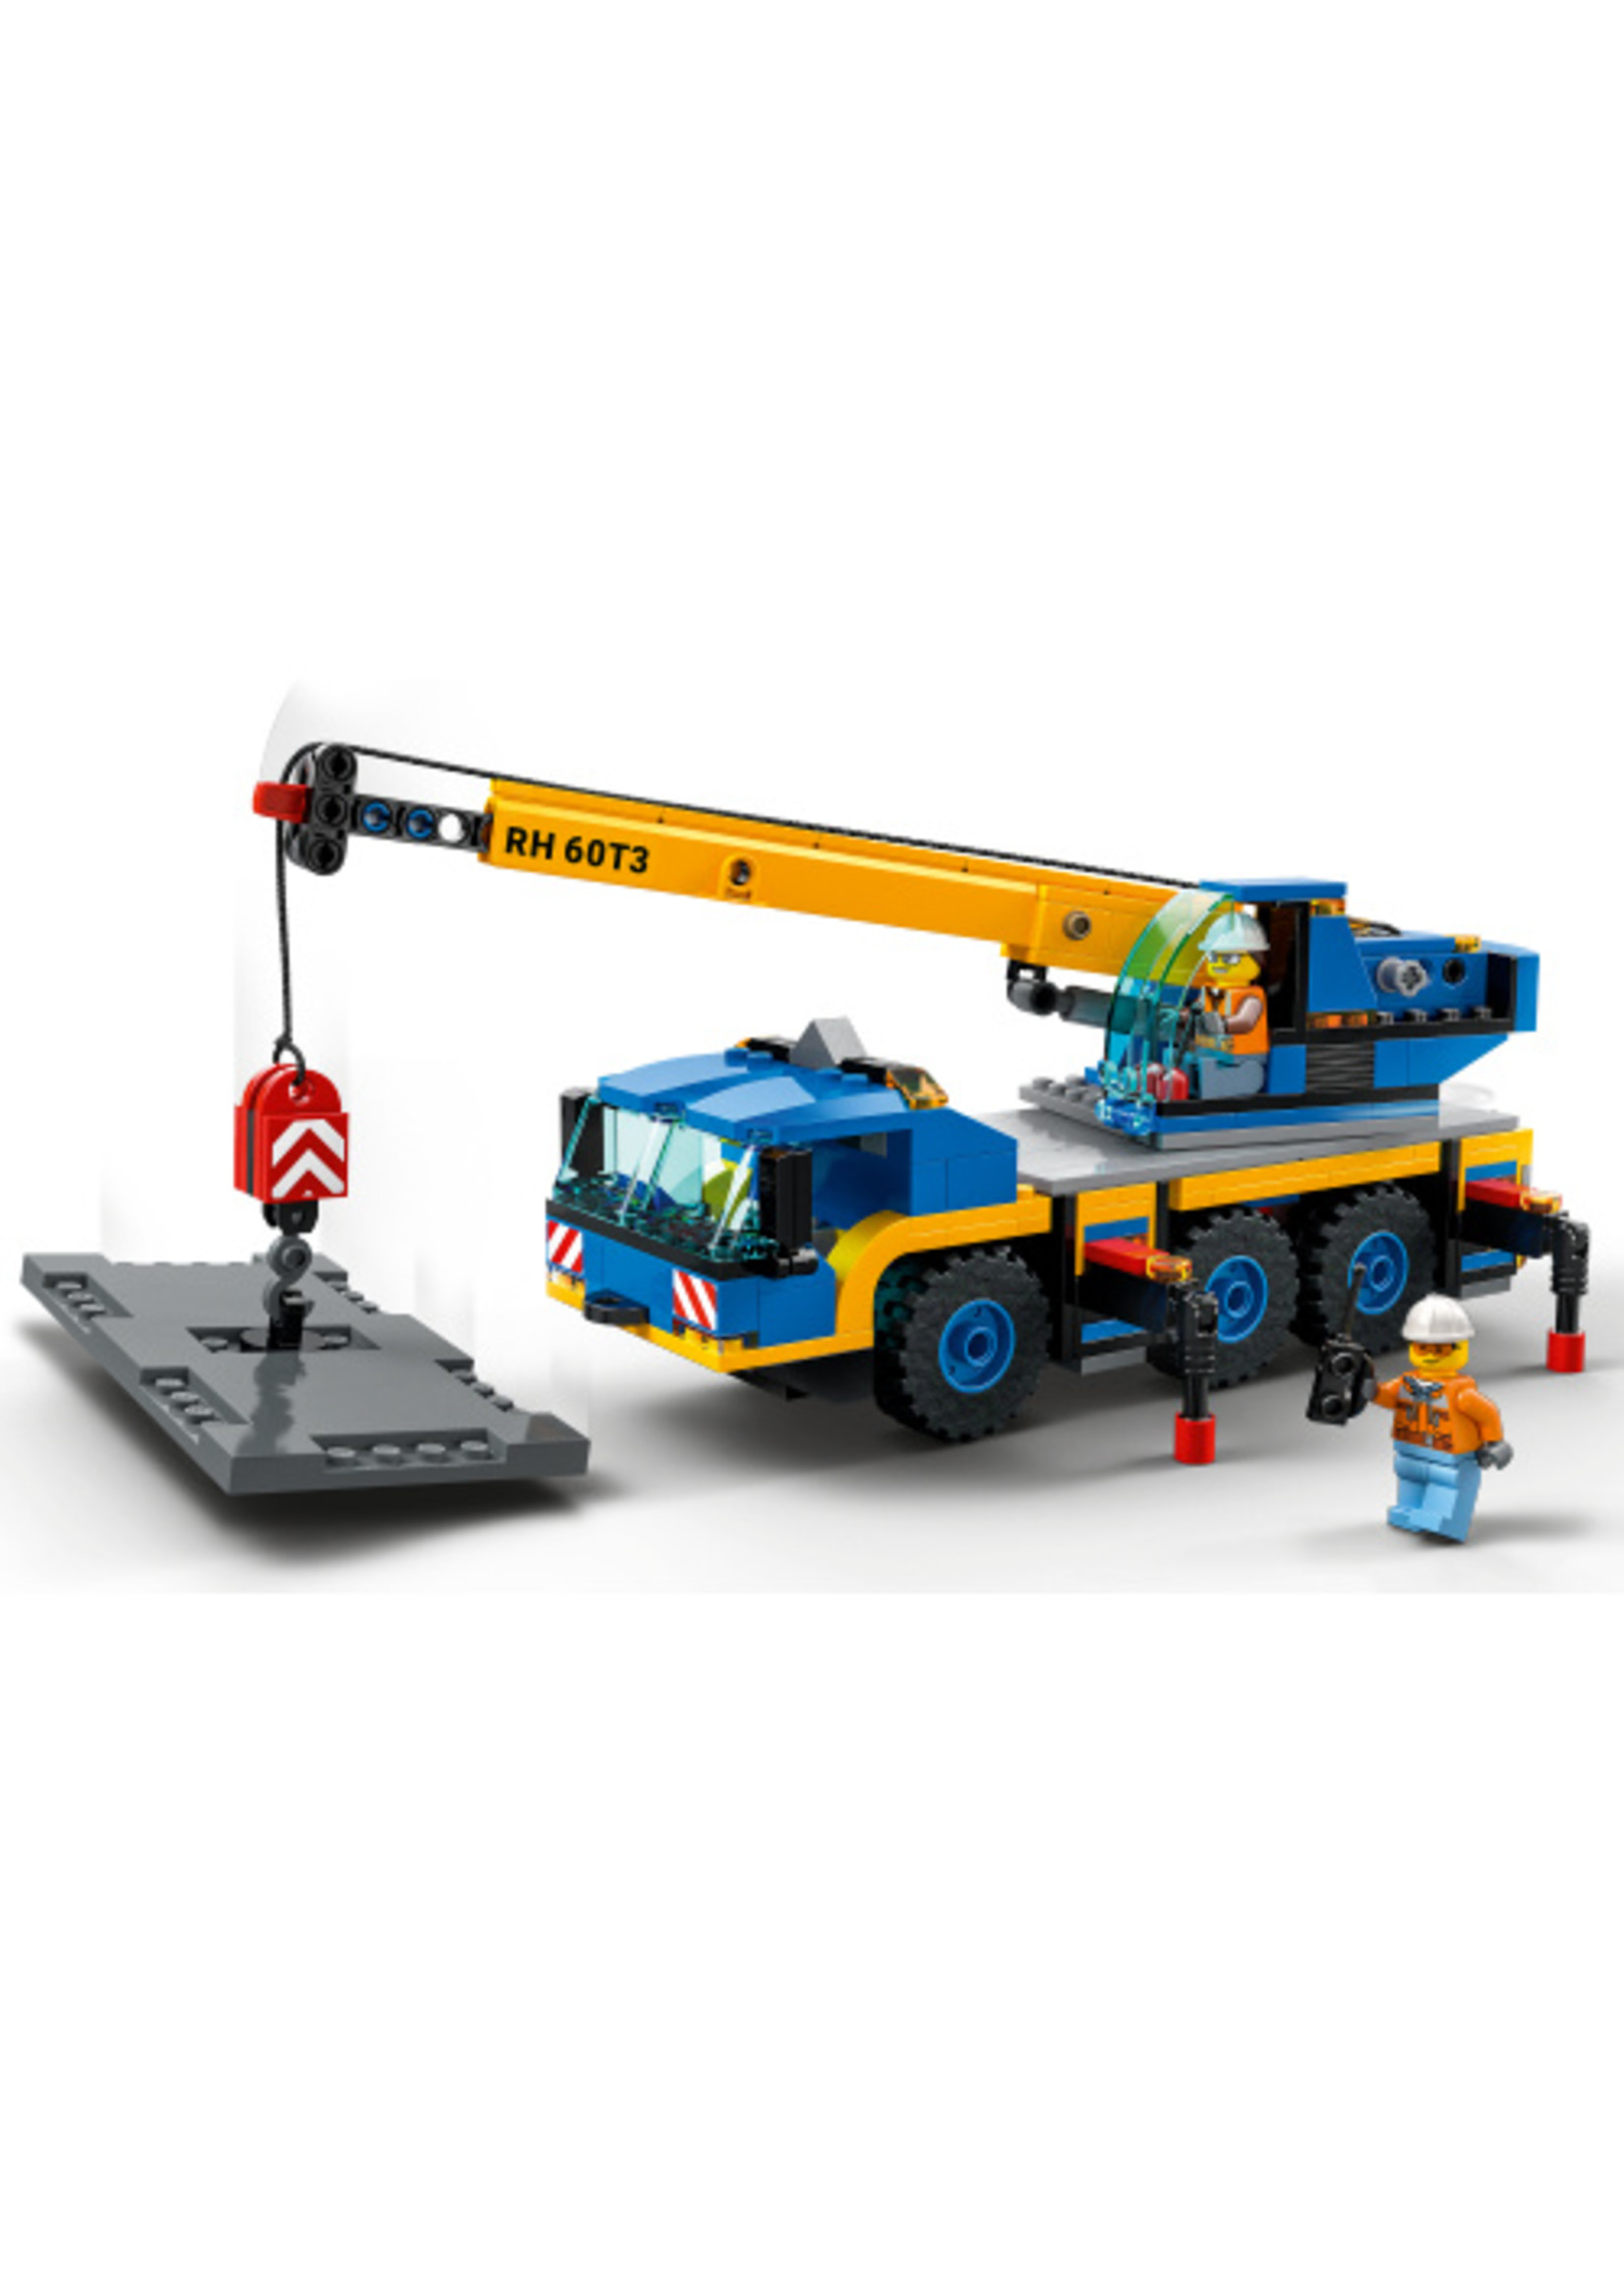 LEGO 60324 - Mobile Crane